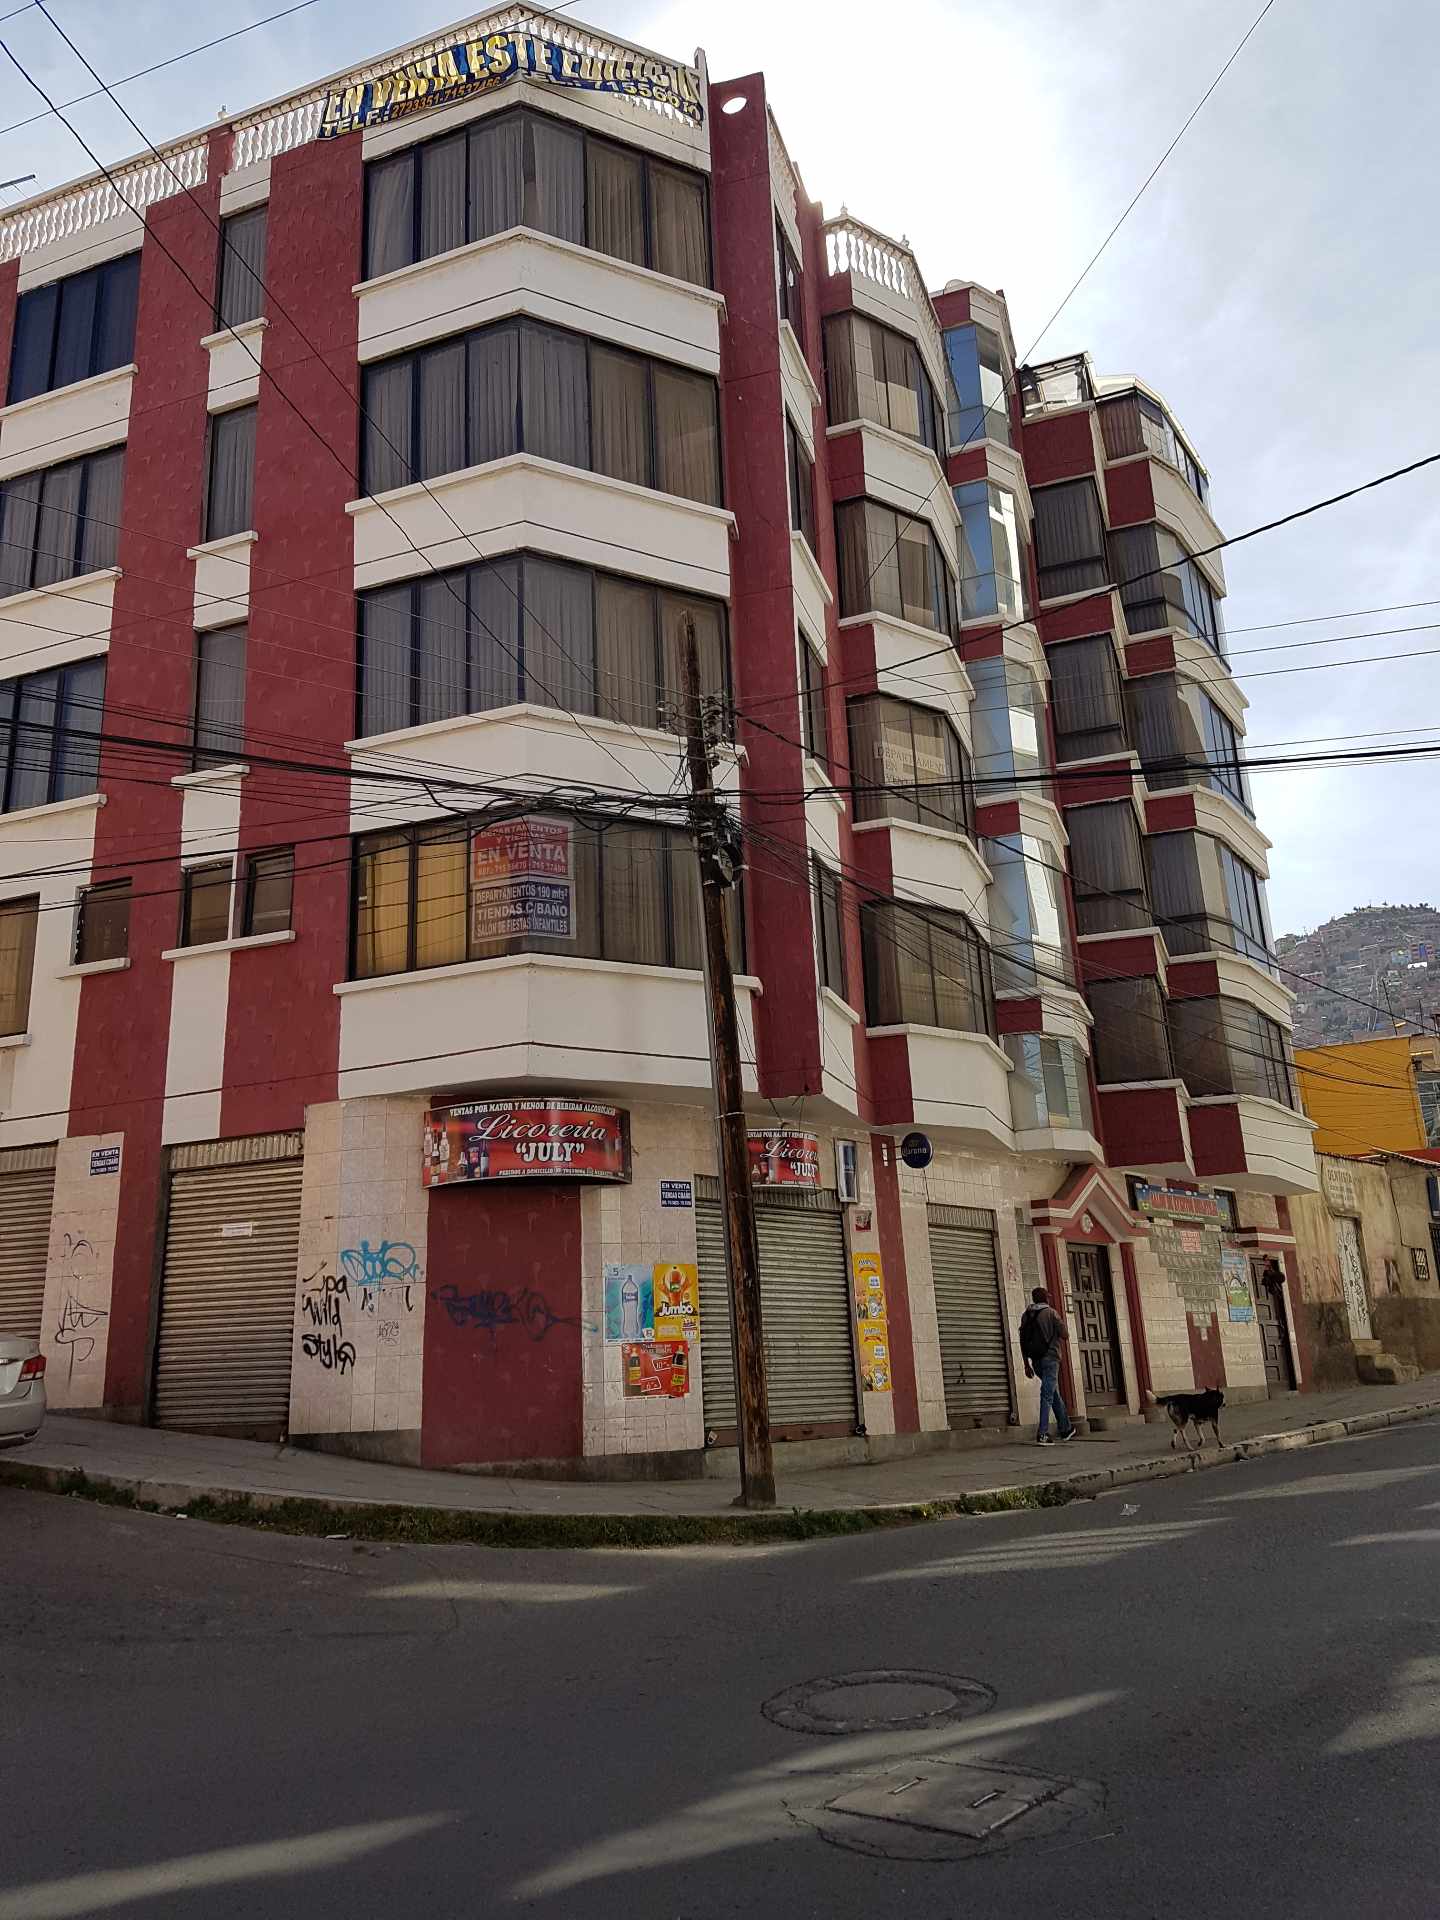 Departamento Villa Fatima a la altura del shopping La cumbre, paralela a la avenida principal. Calle Tnte Cnl Saavedra esq. Felipe Lopez   Foto 17